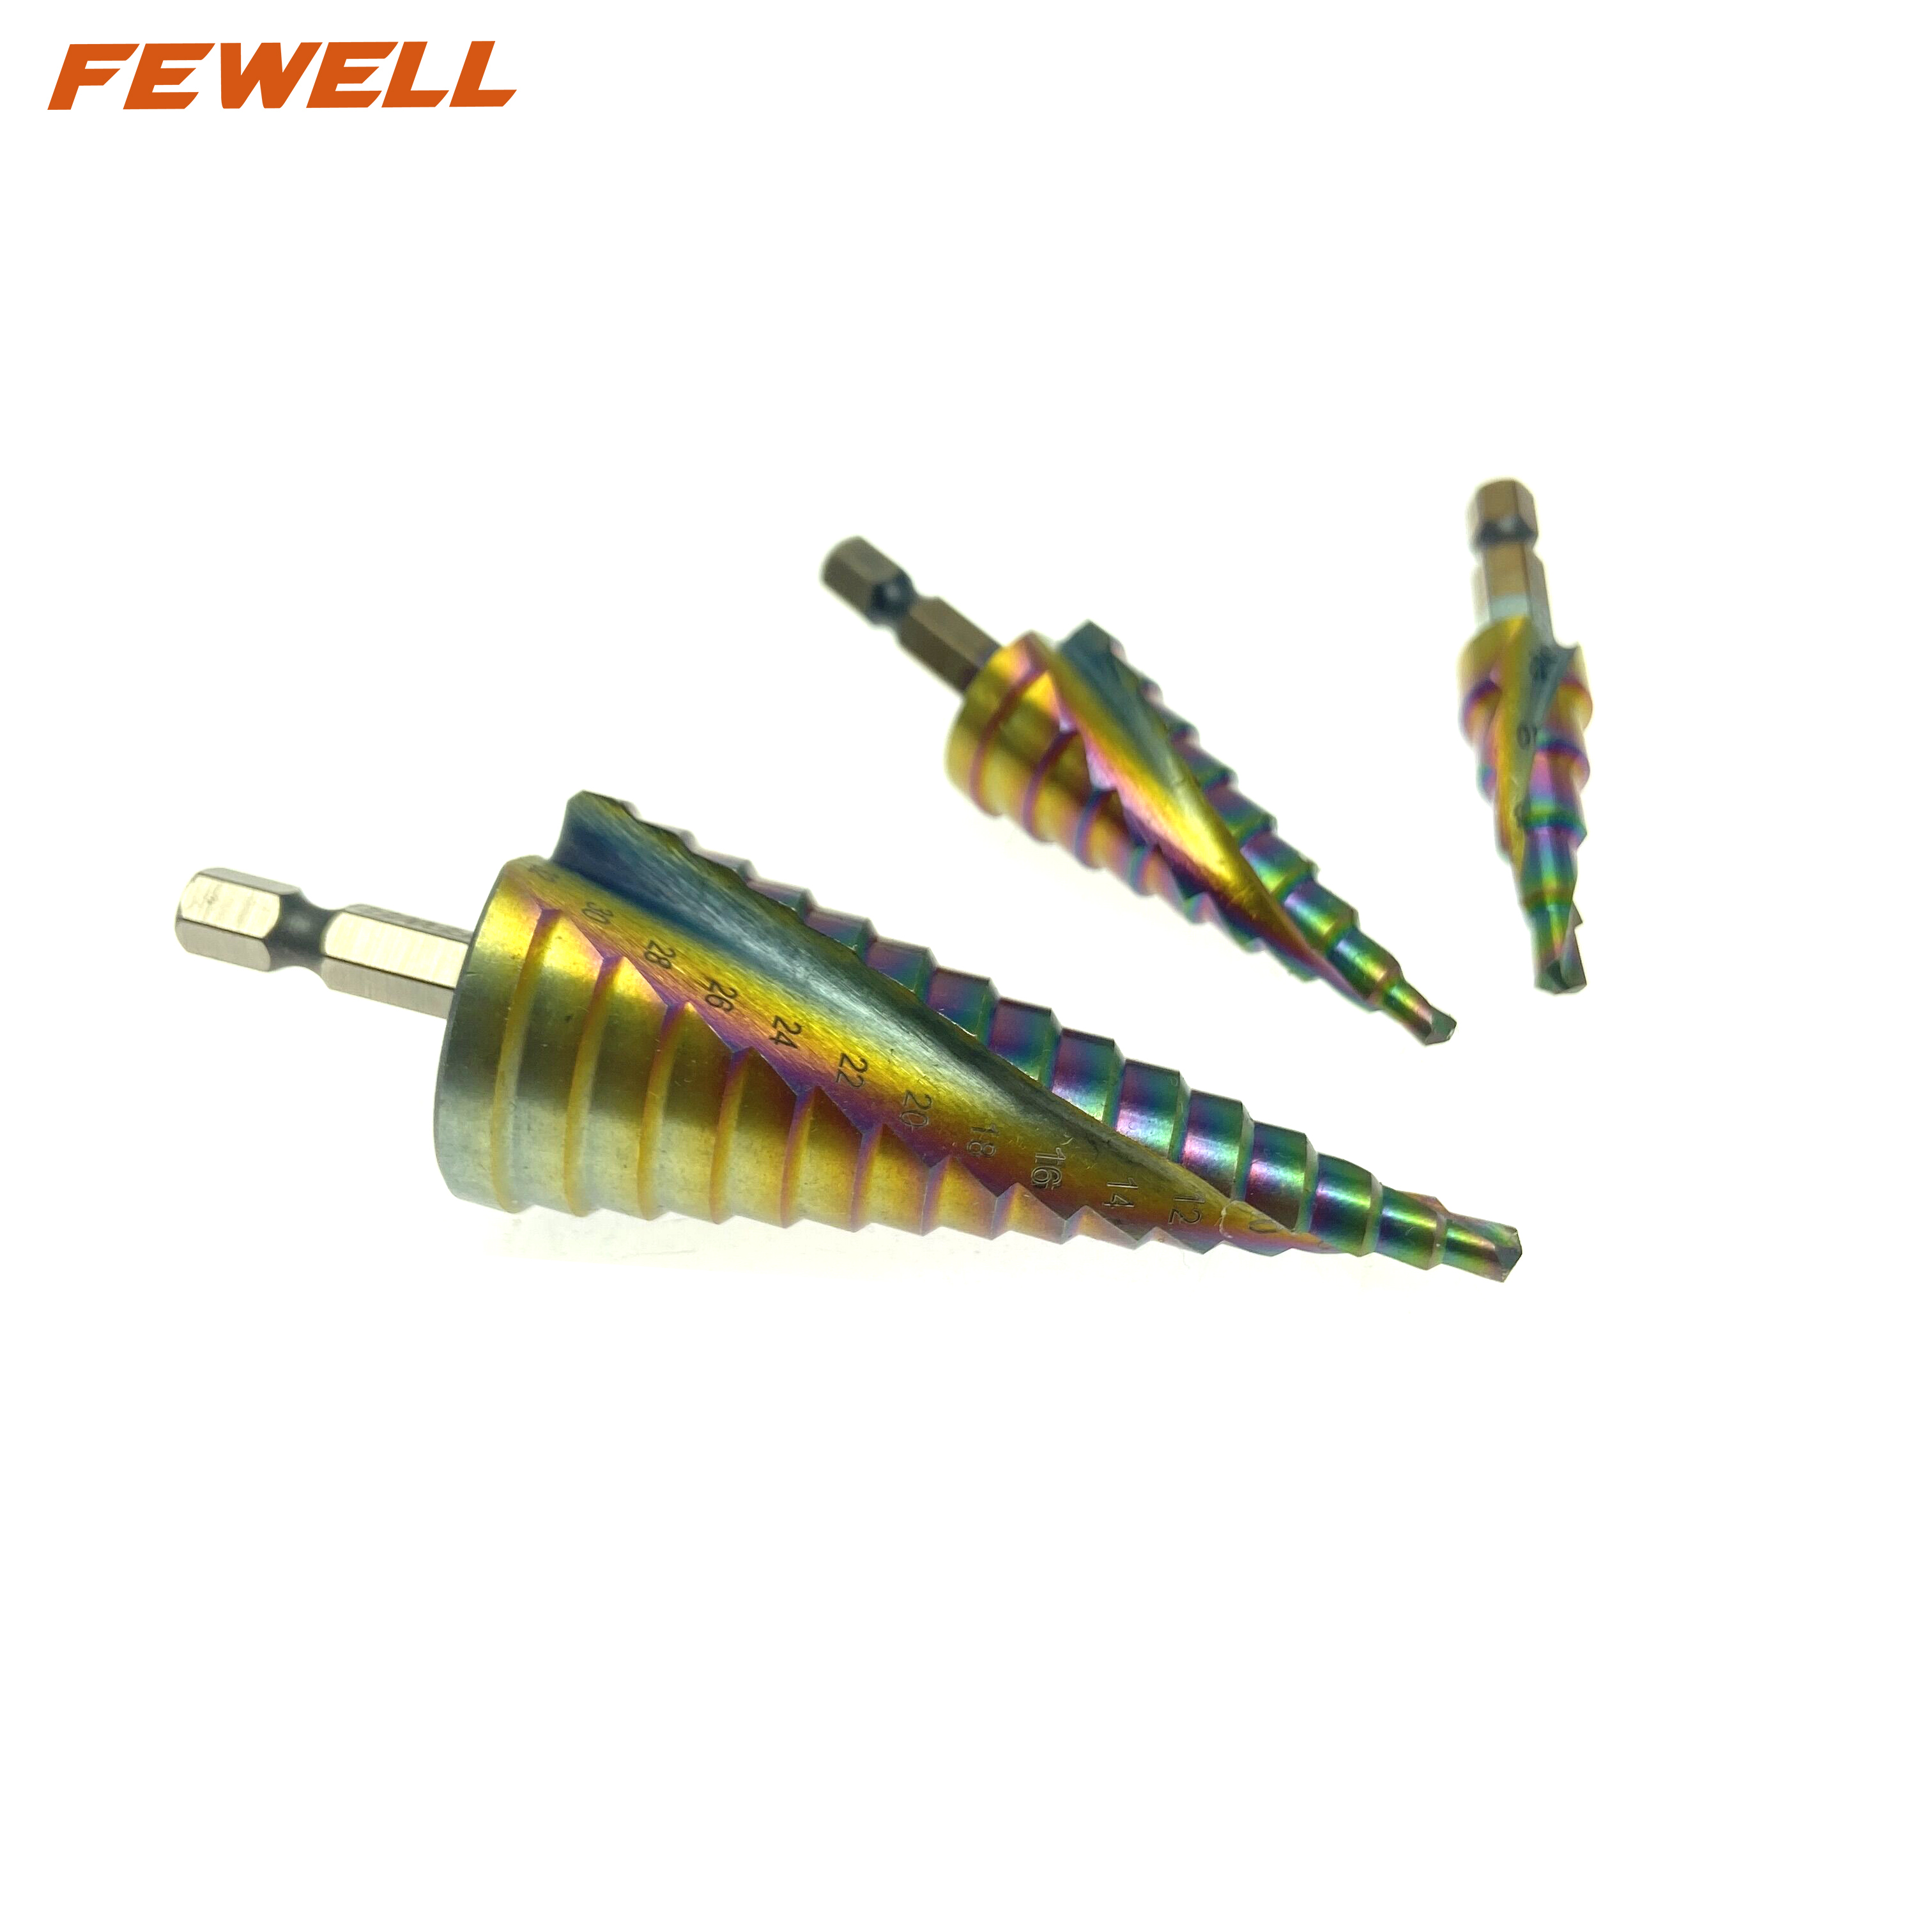 3 ADET 4-12mm 4-20mm 4-32mm HSS M35 Altıgen Şaft Elektrikli El Aletleri spiral flüt Titanyum Adım Matkap Uçları Metal Sondaj için